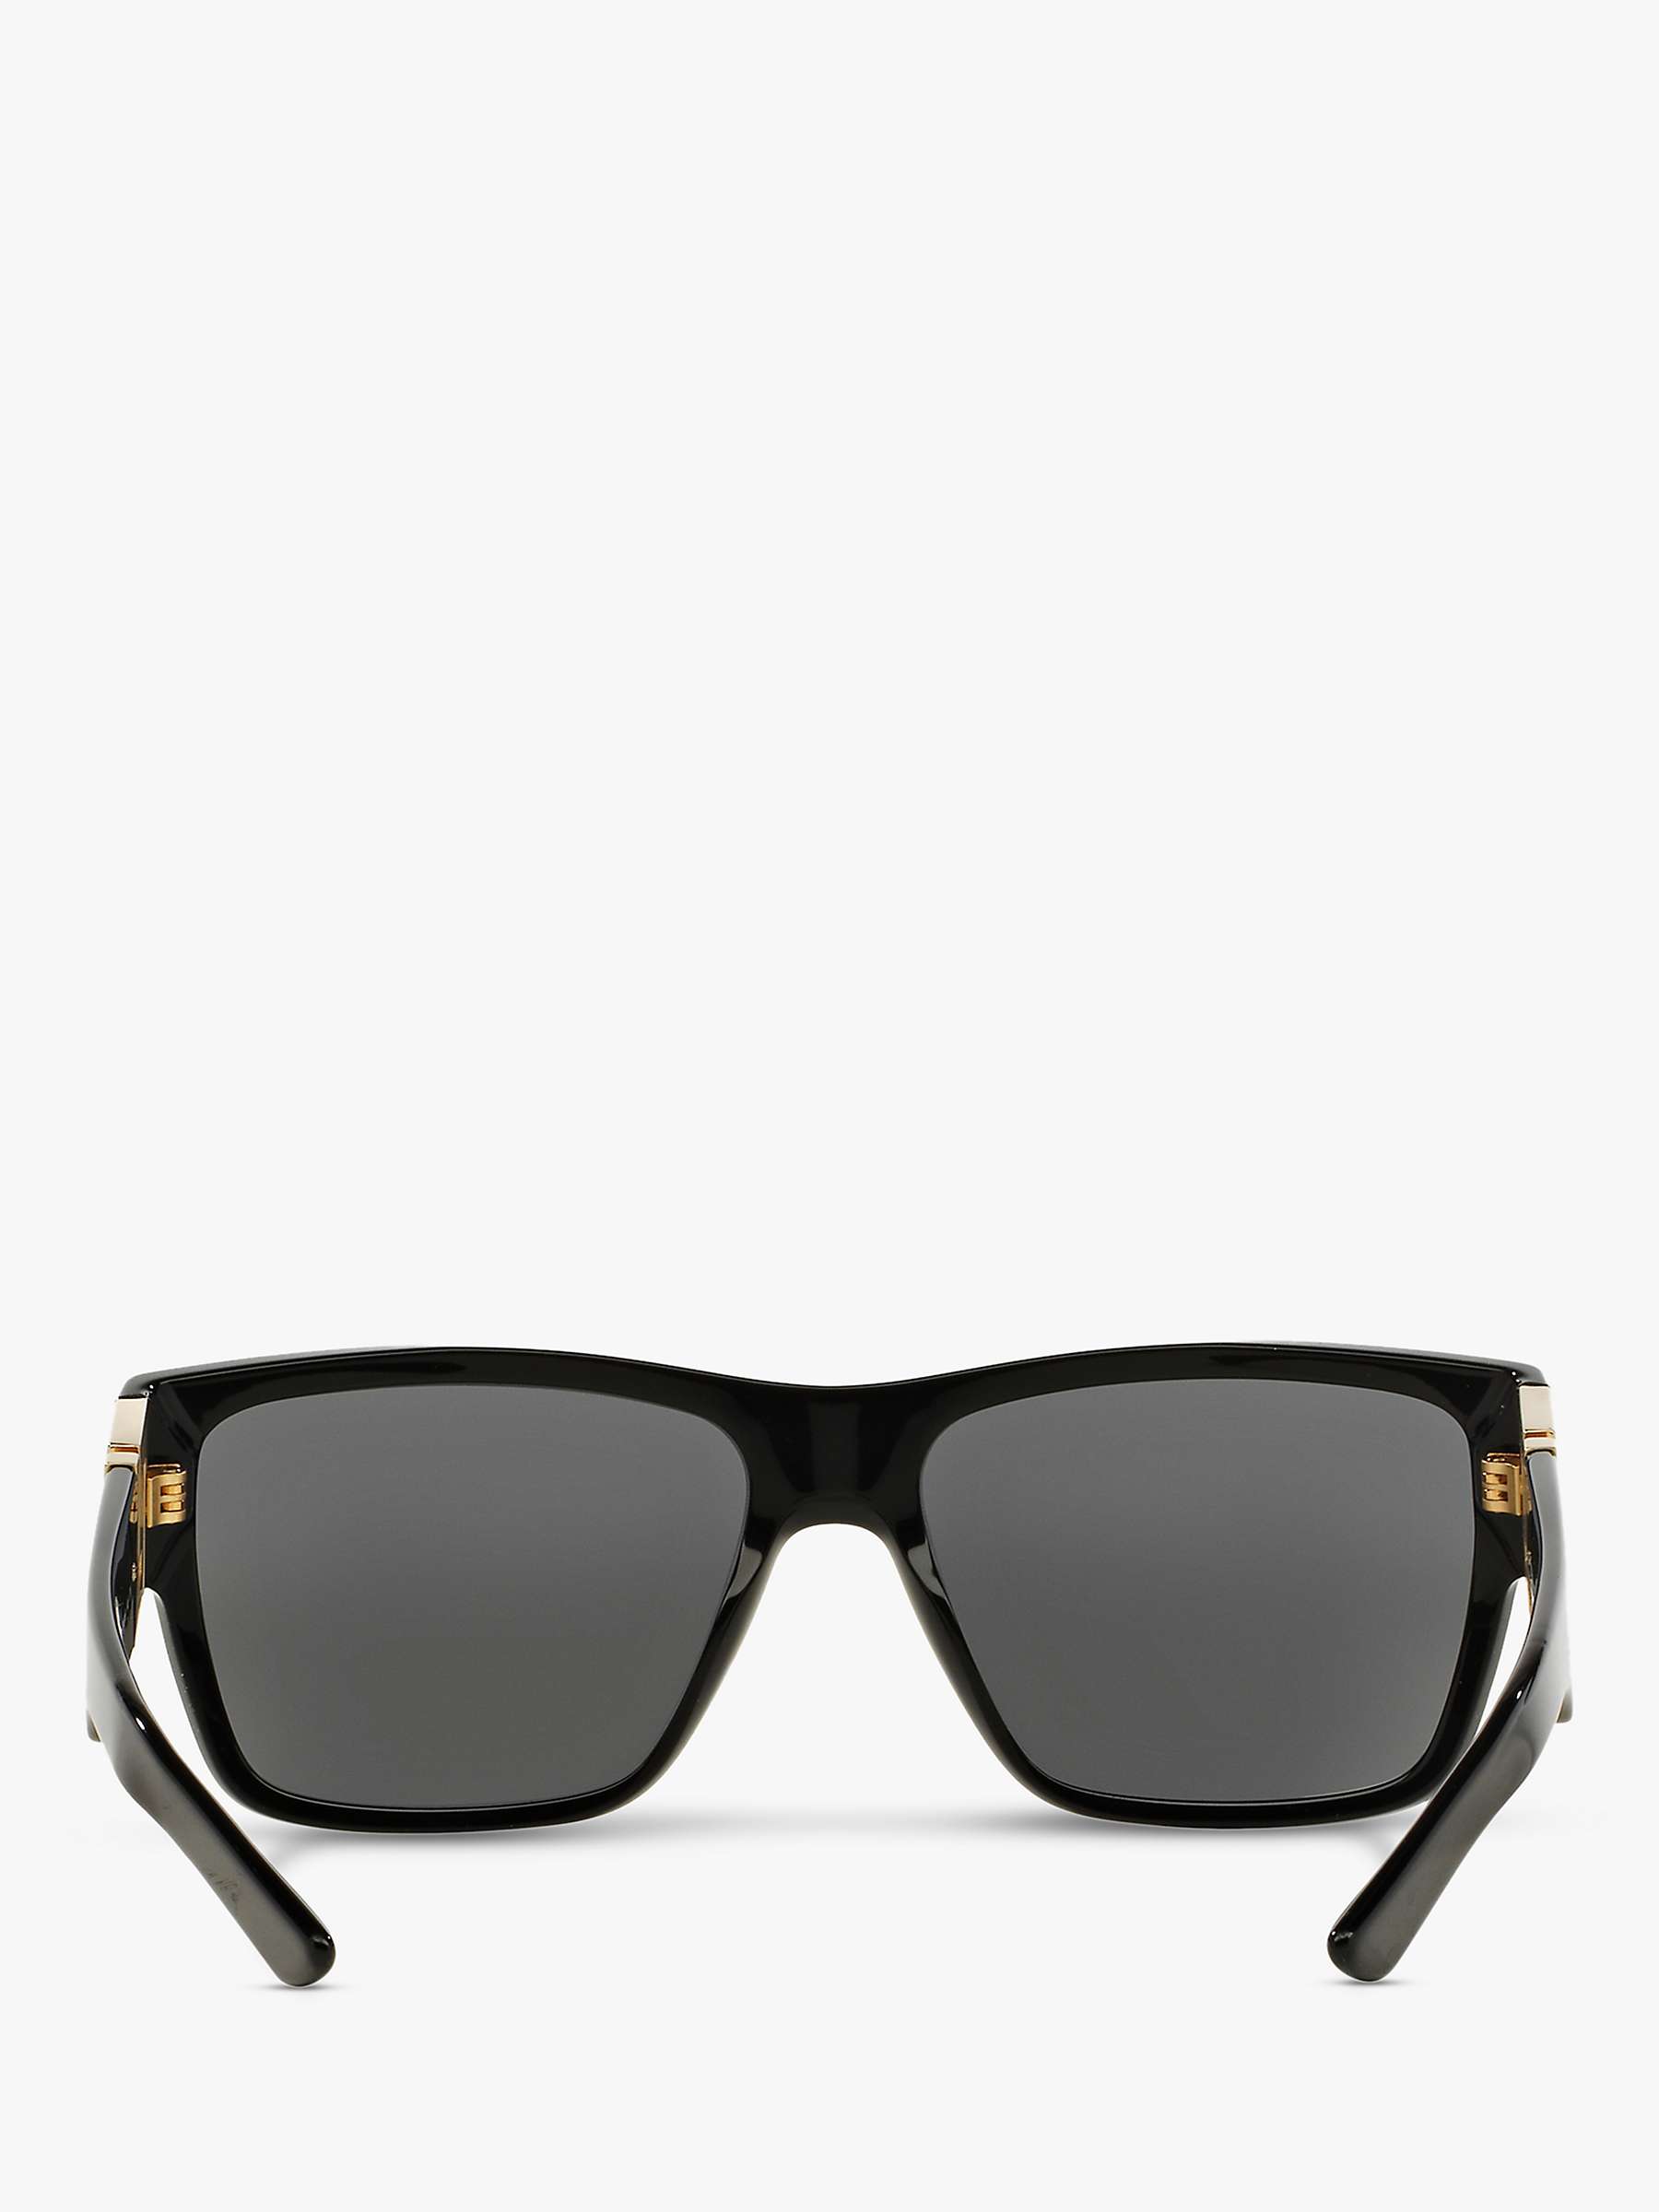 Buy Versace VE4296 Men's Polarised Square Sunglasses, Black/Grey Online at johnlewis.com